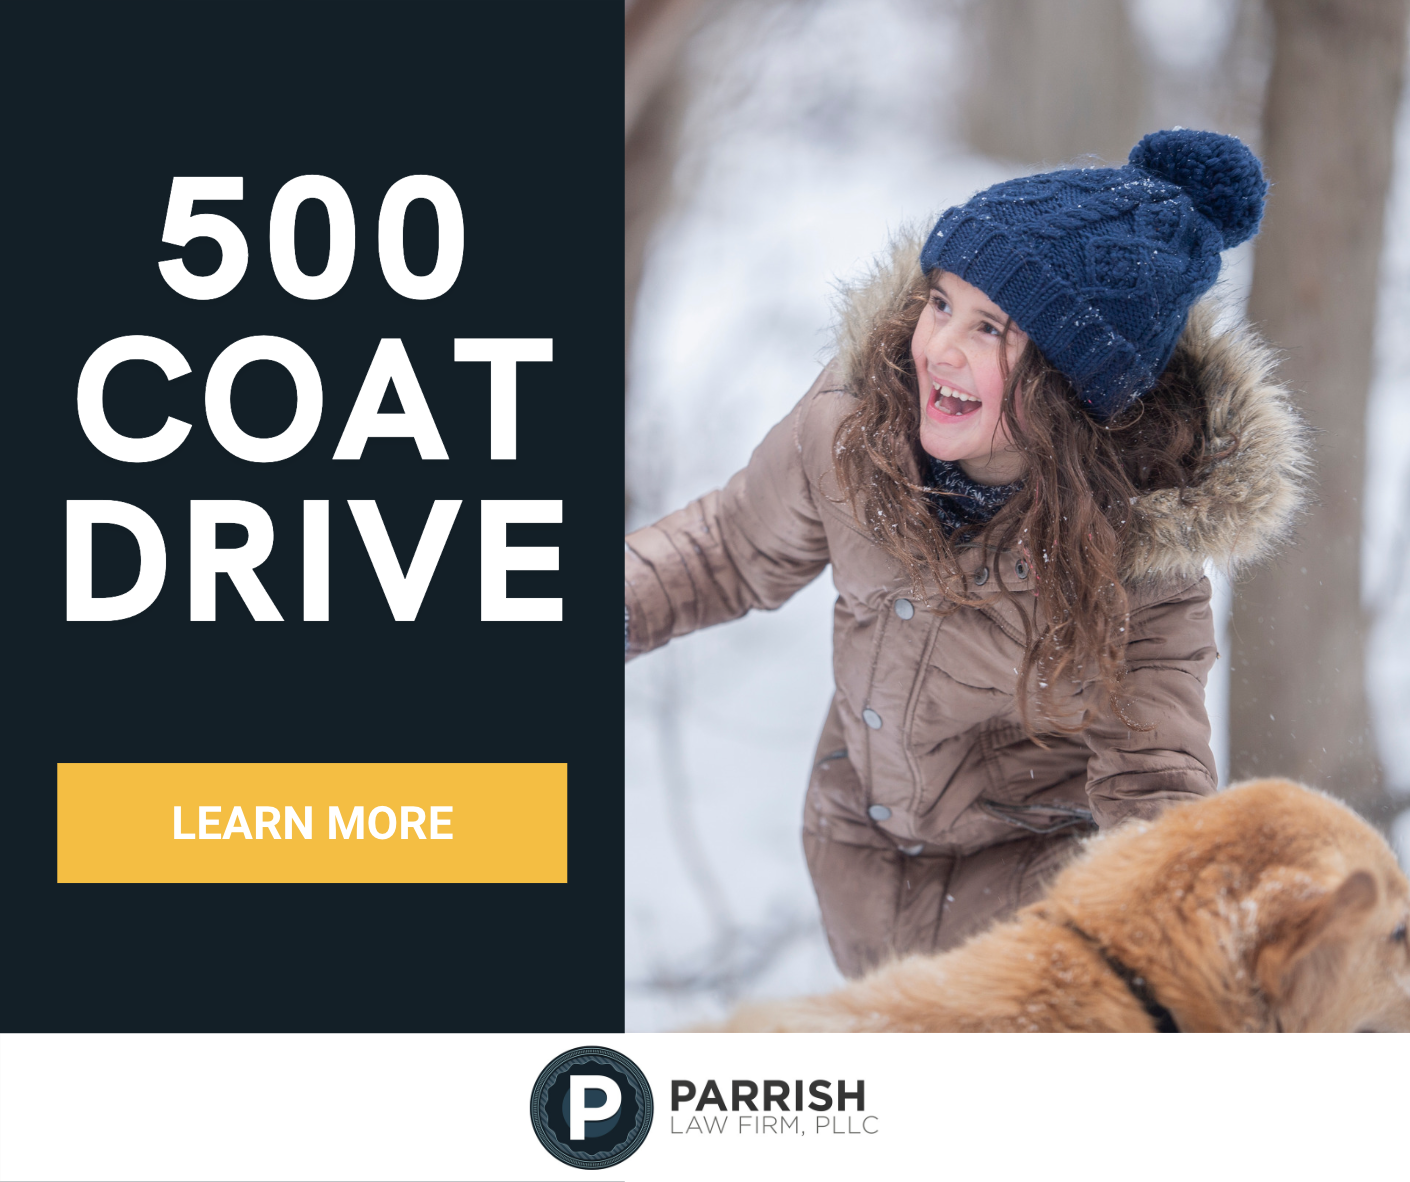 winter coat drive